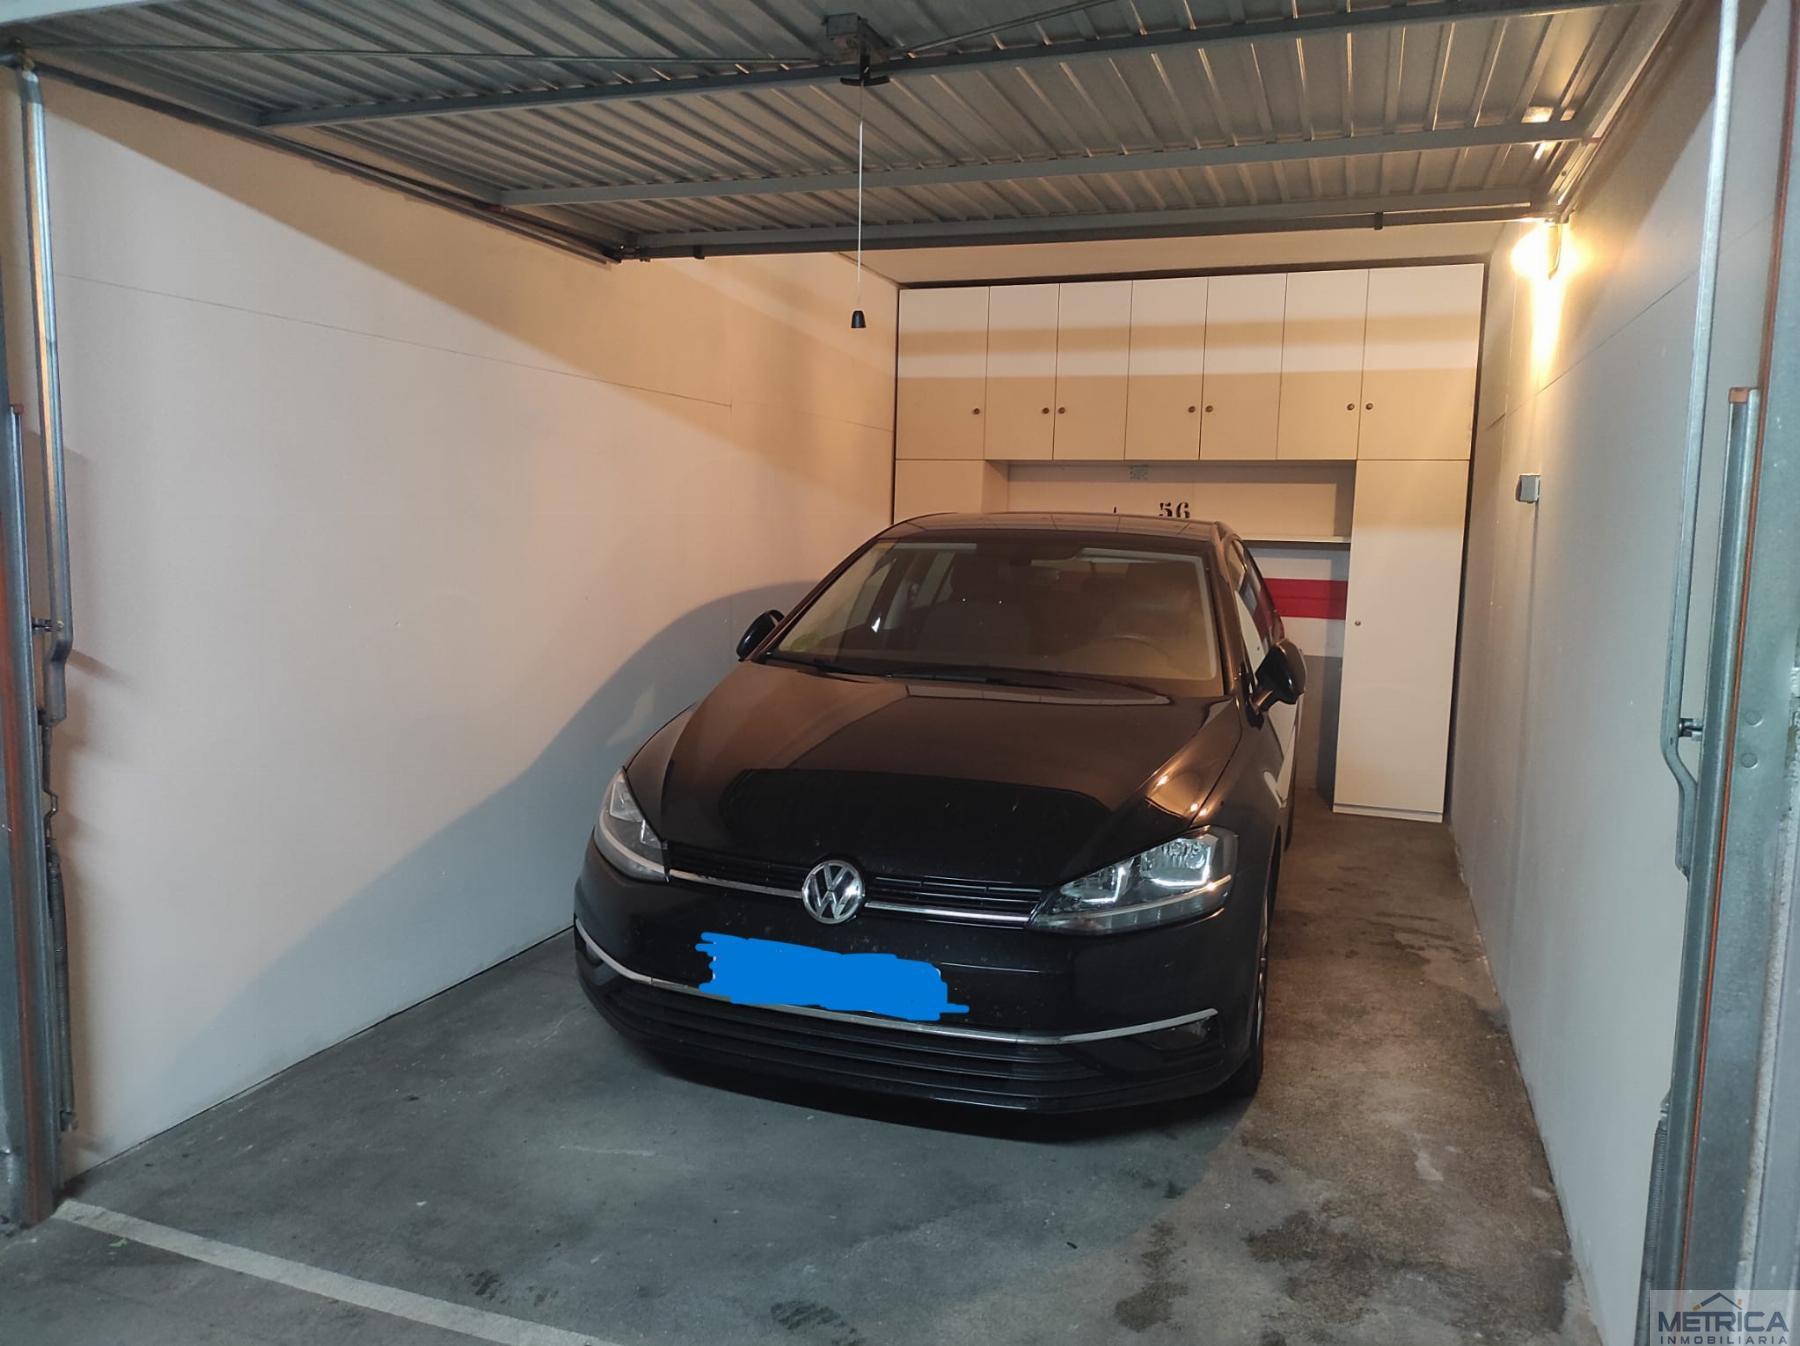 For sale of garage in Salamanca